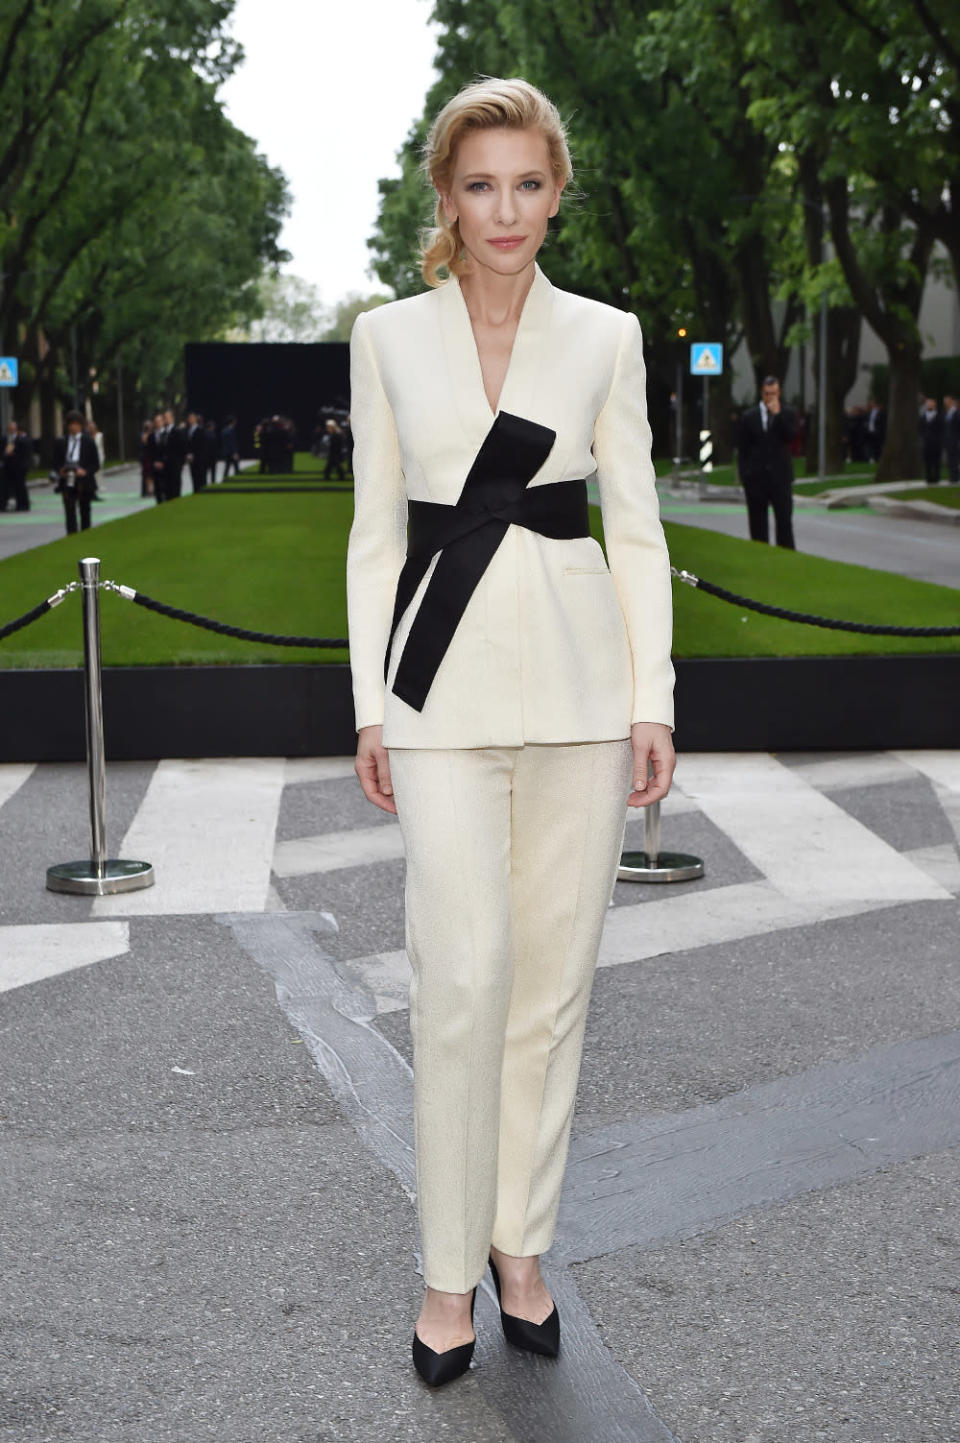 Best Dressed 2015: Cate Blanchett